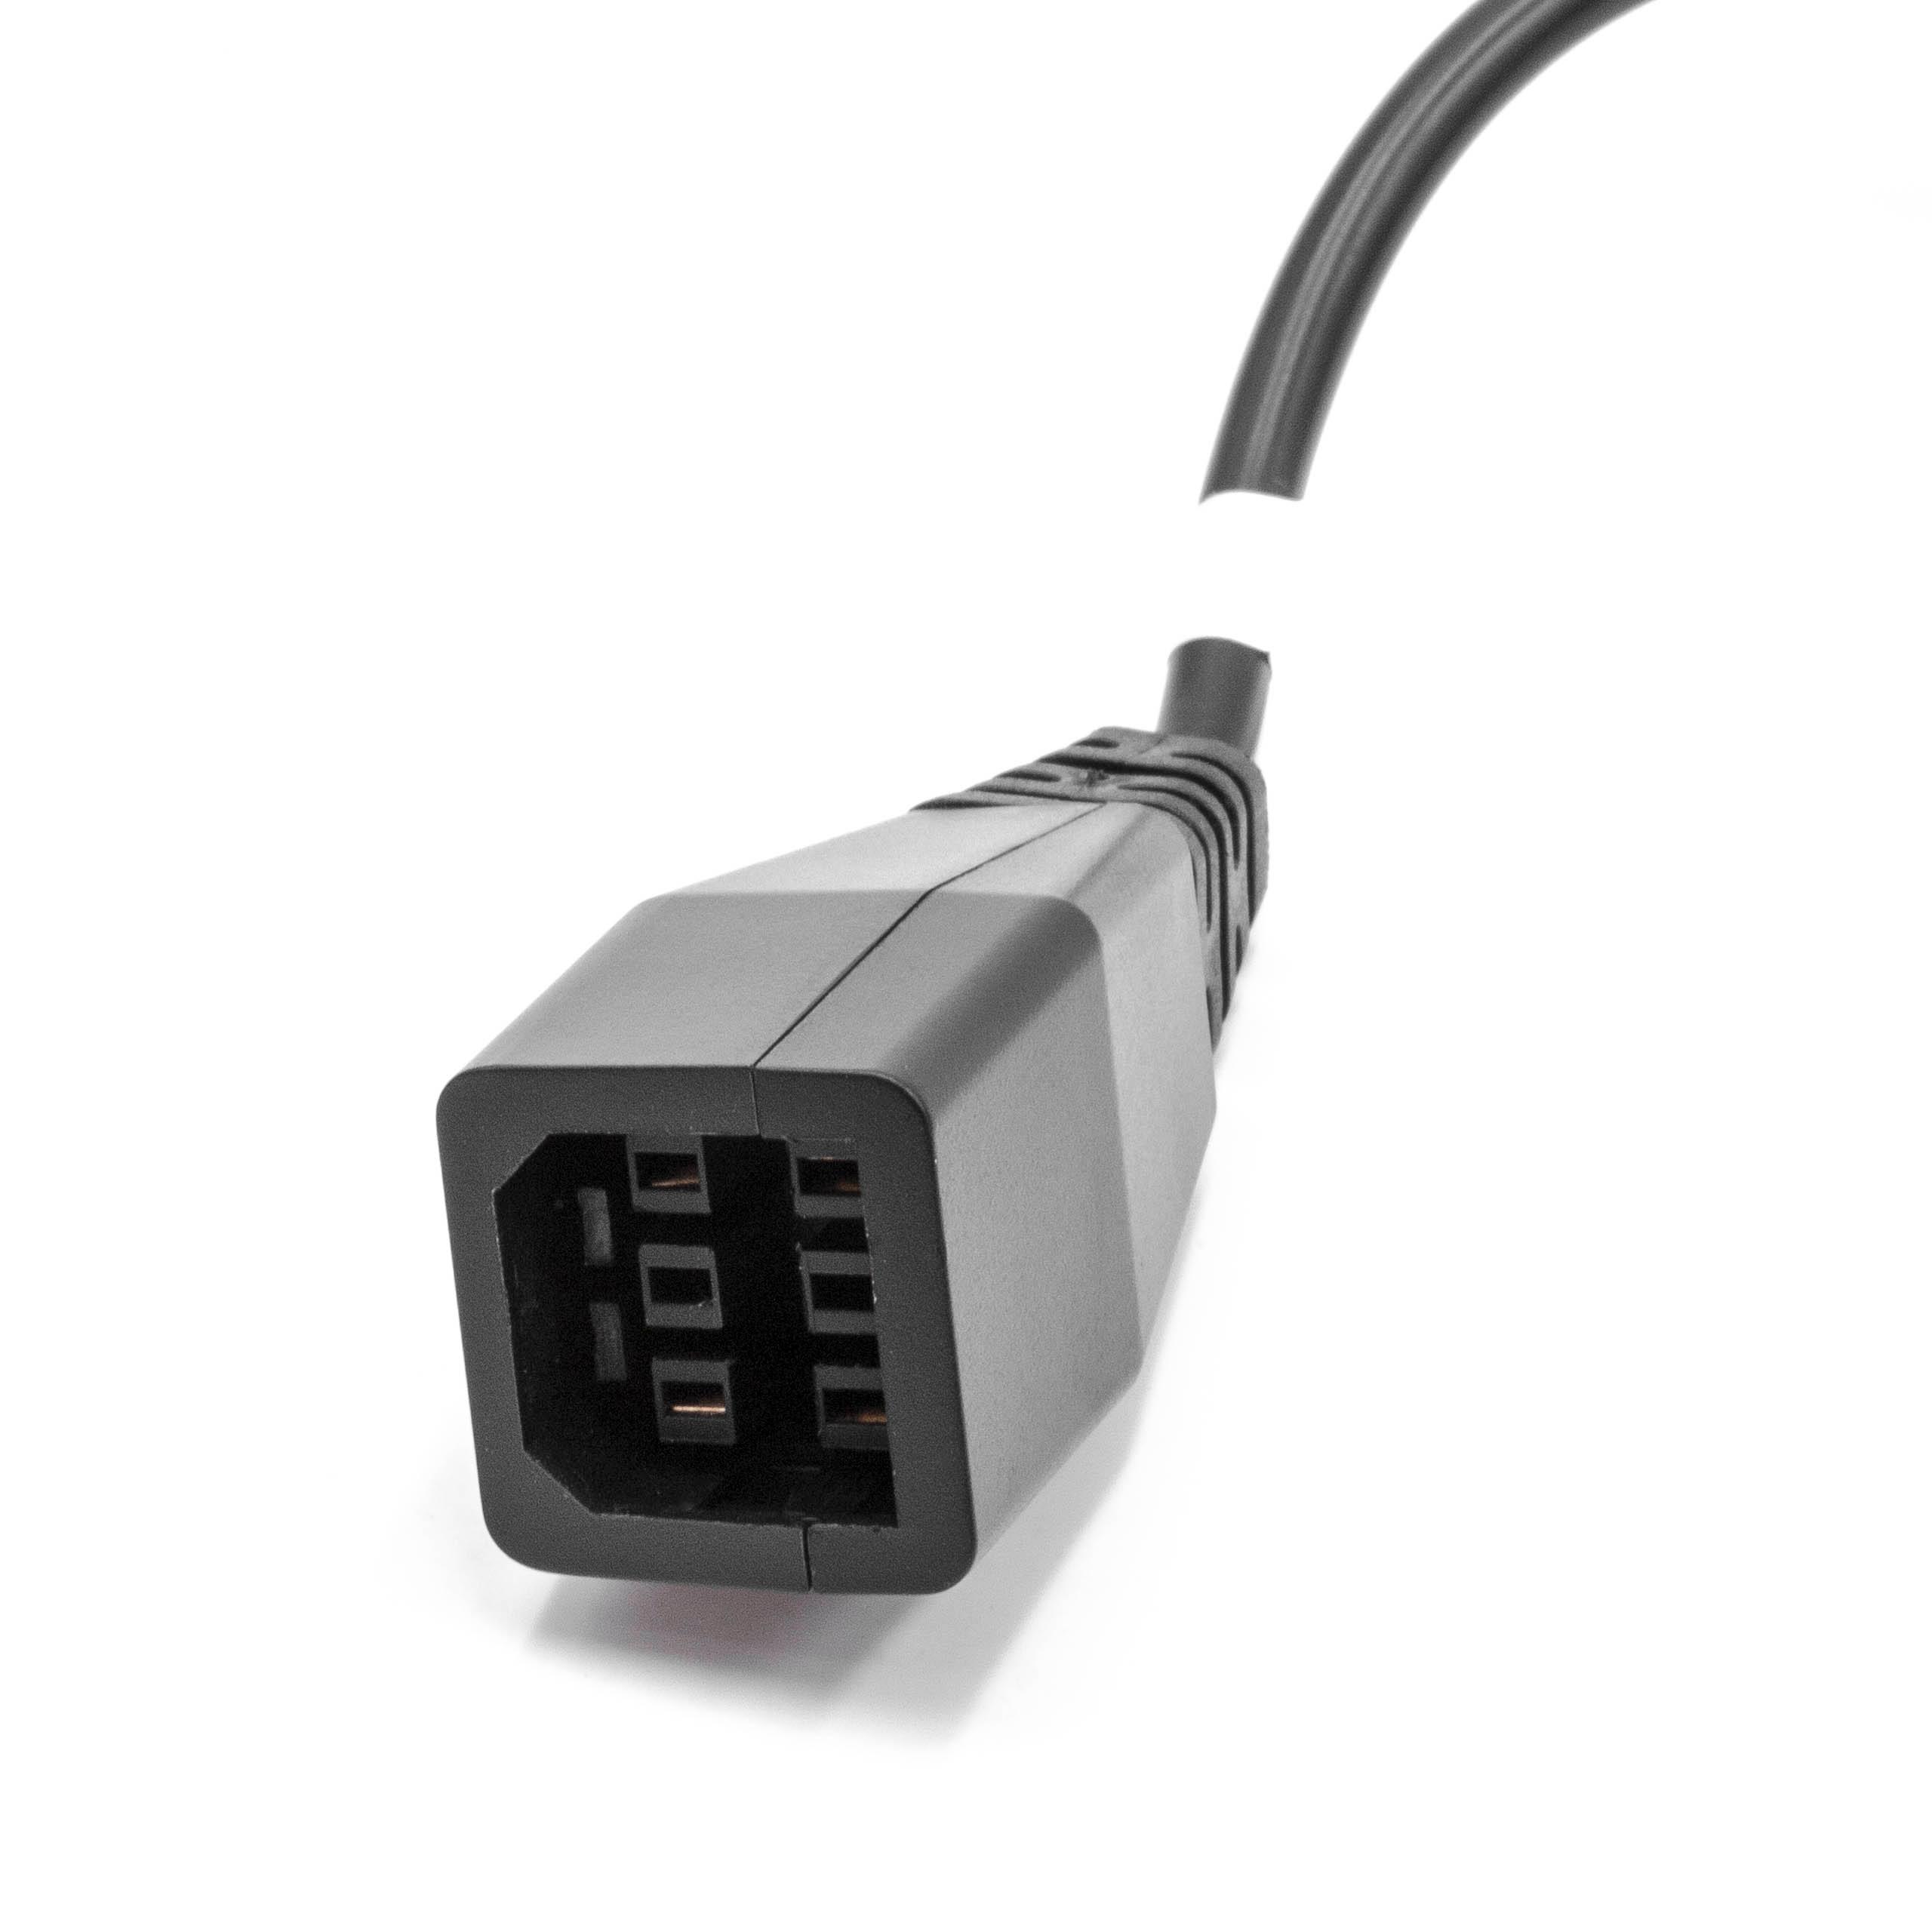 Cable adaptador para fuente alimentación para consola de juegos Microsoft Xbox One, 360 E, 360 Slim - 28 cm